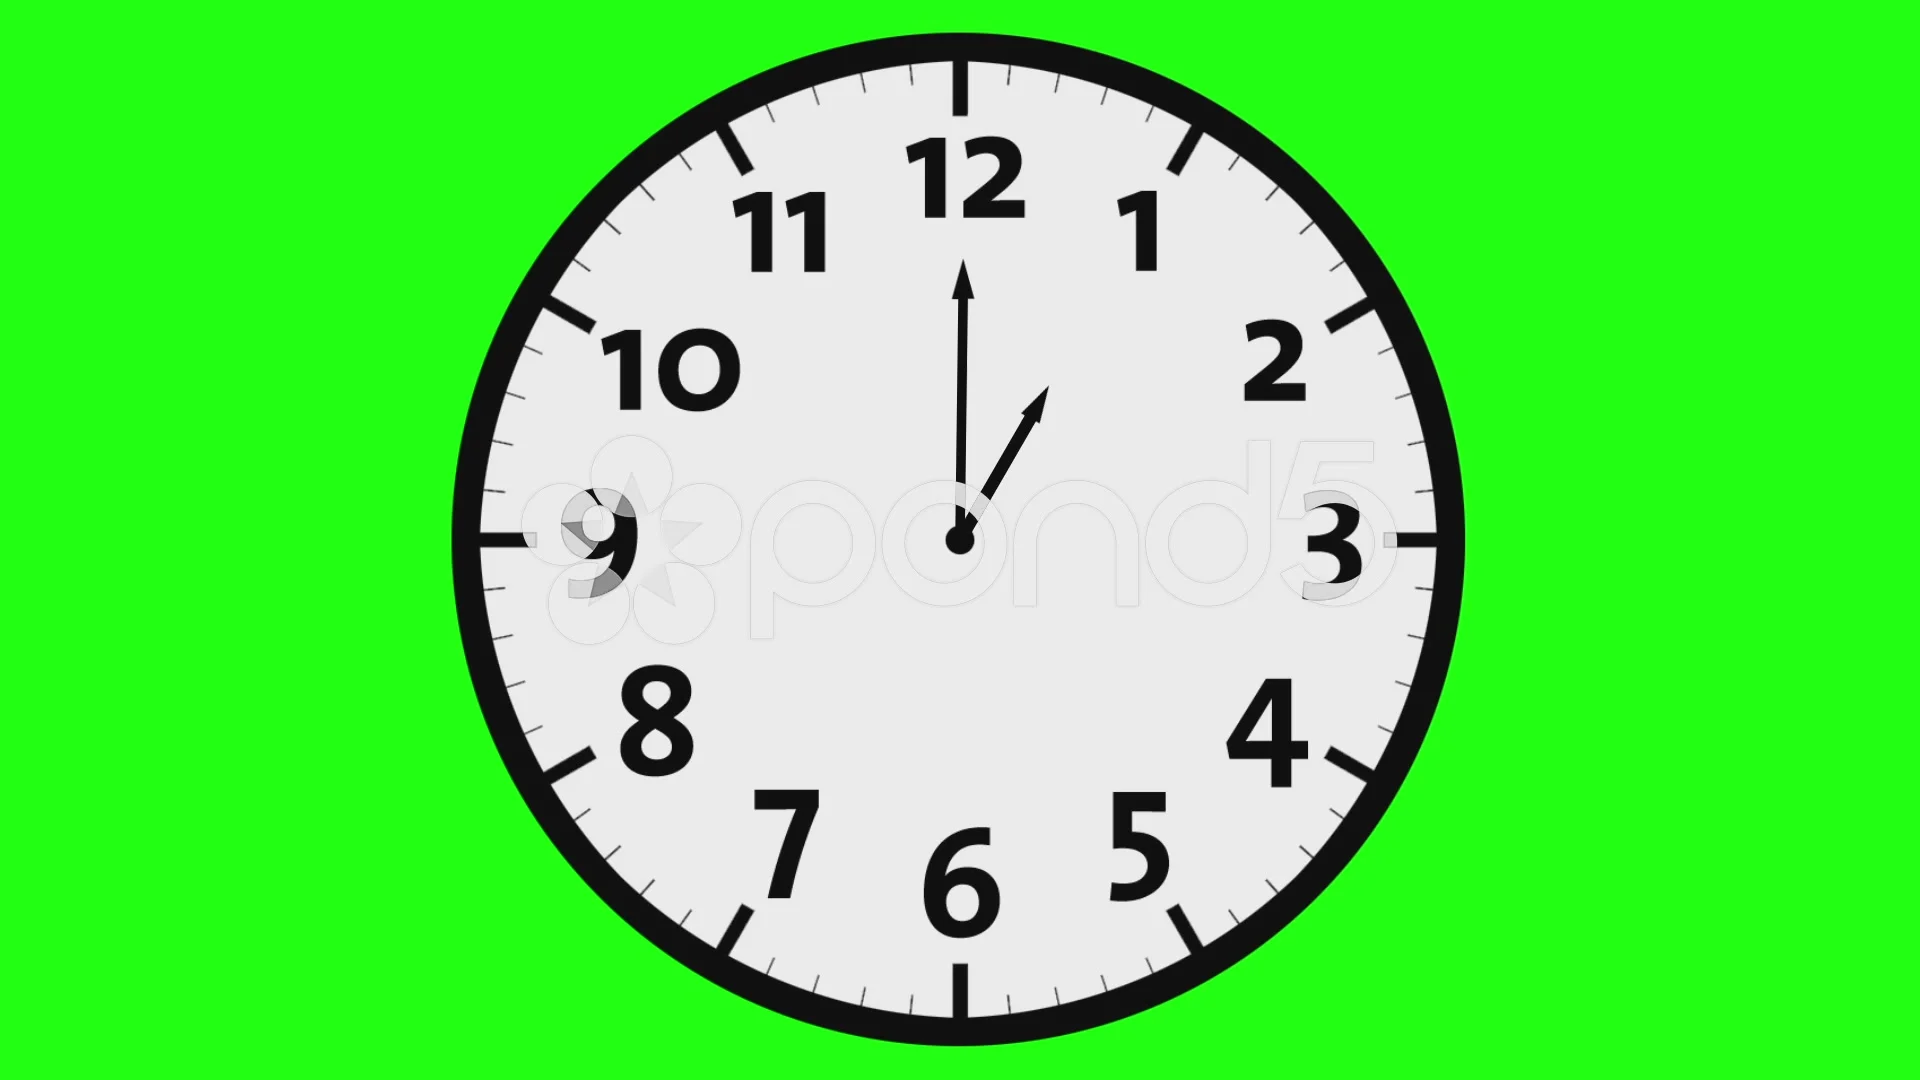 18 00 p. Часы на зеленом фоне. Часы на хромакее. Часы на салатовом фоне. Часы настенные с зеленым фоном.